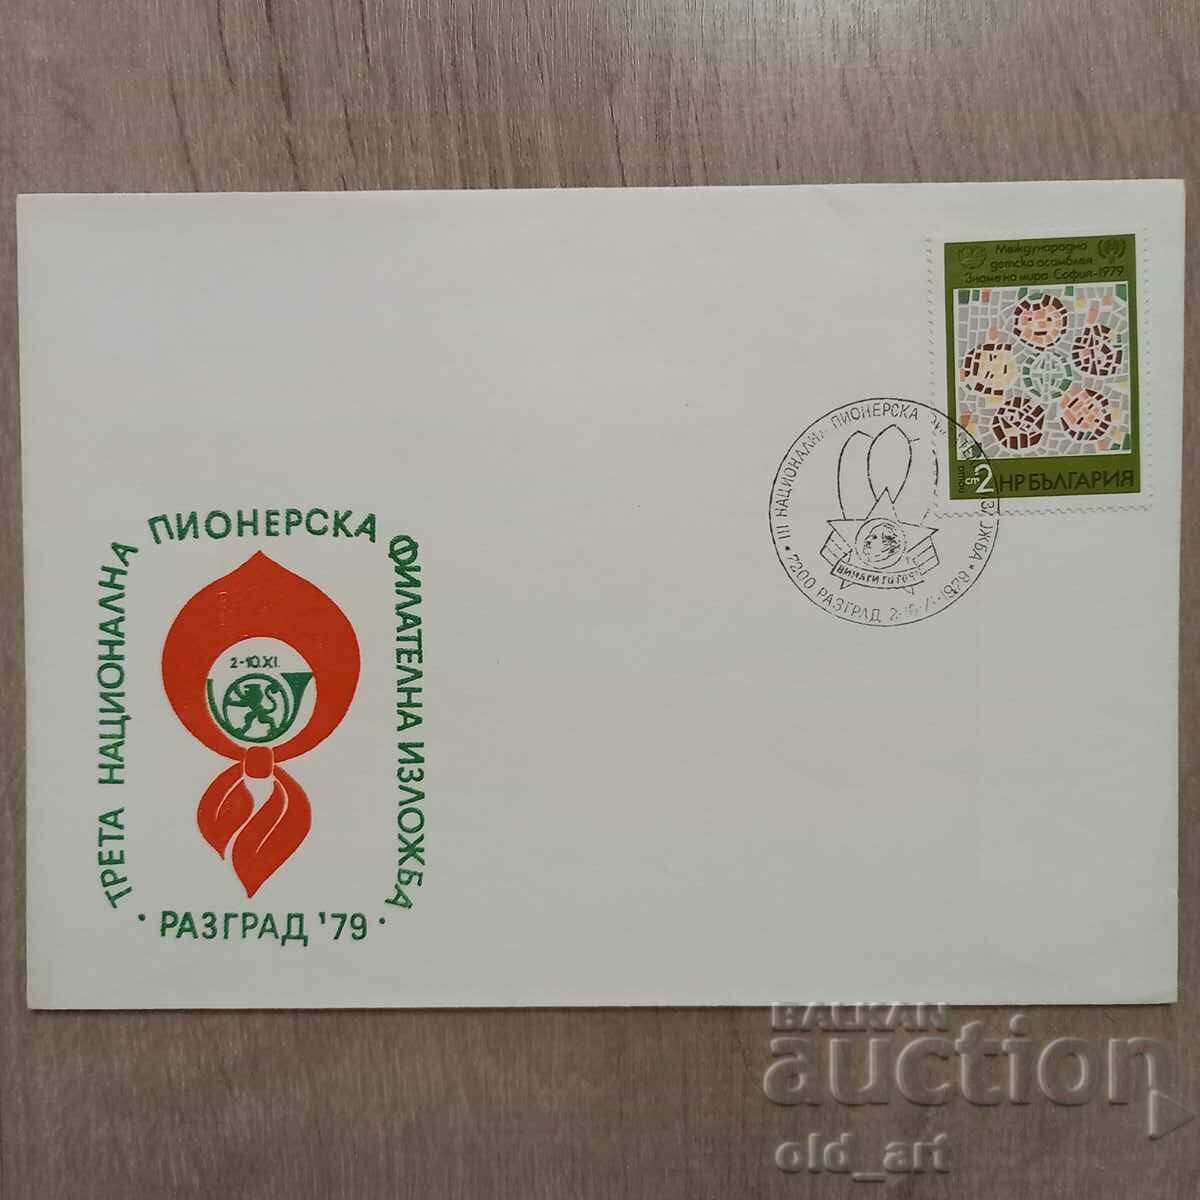 Postal envelope - III Nat. pioneer philately. exhibition